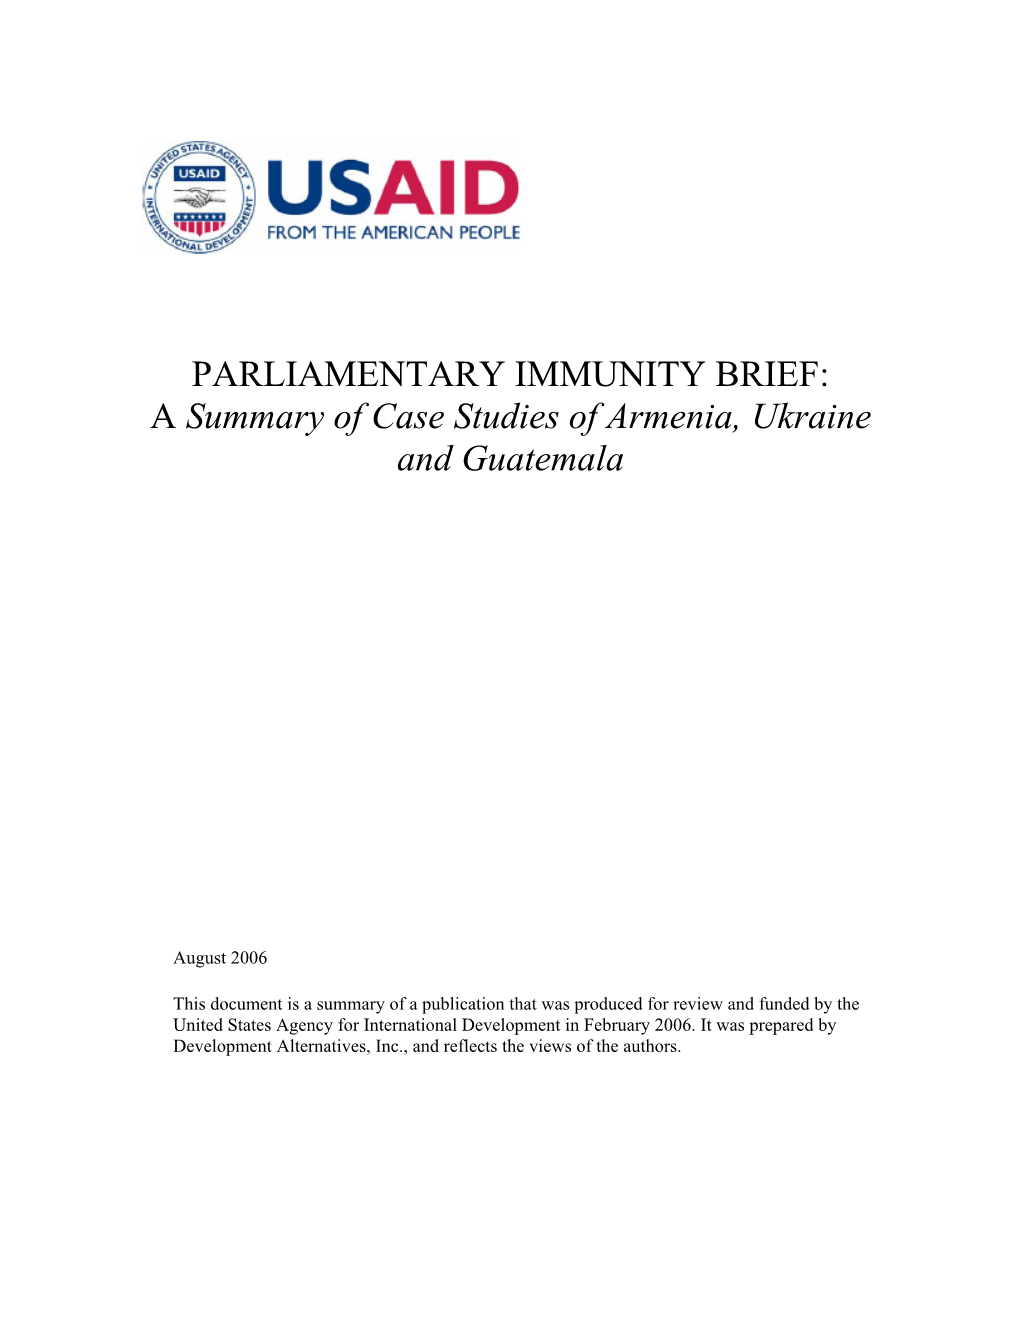 PARLIAMENTARY IMMUNITY BRIEF: a Summary of Case Studies of Armenia, Ukraine and Guatemala